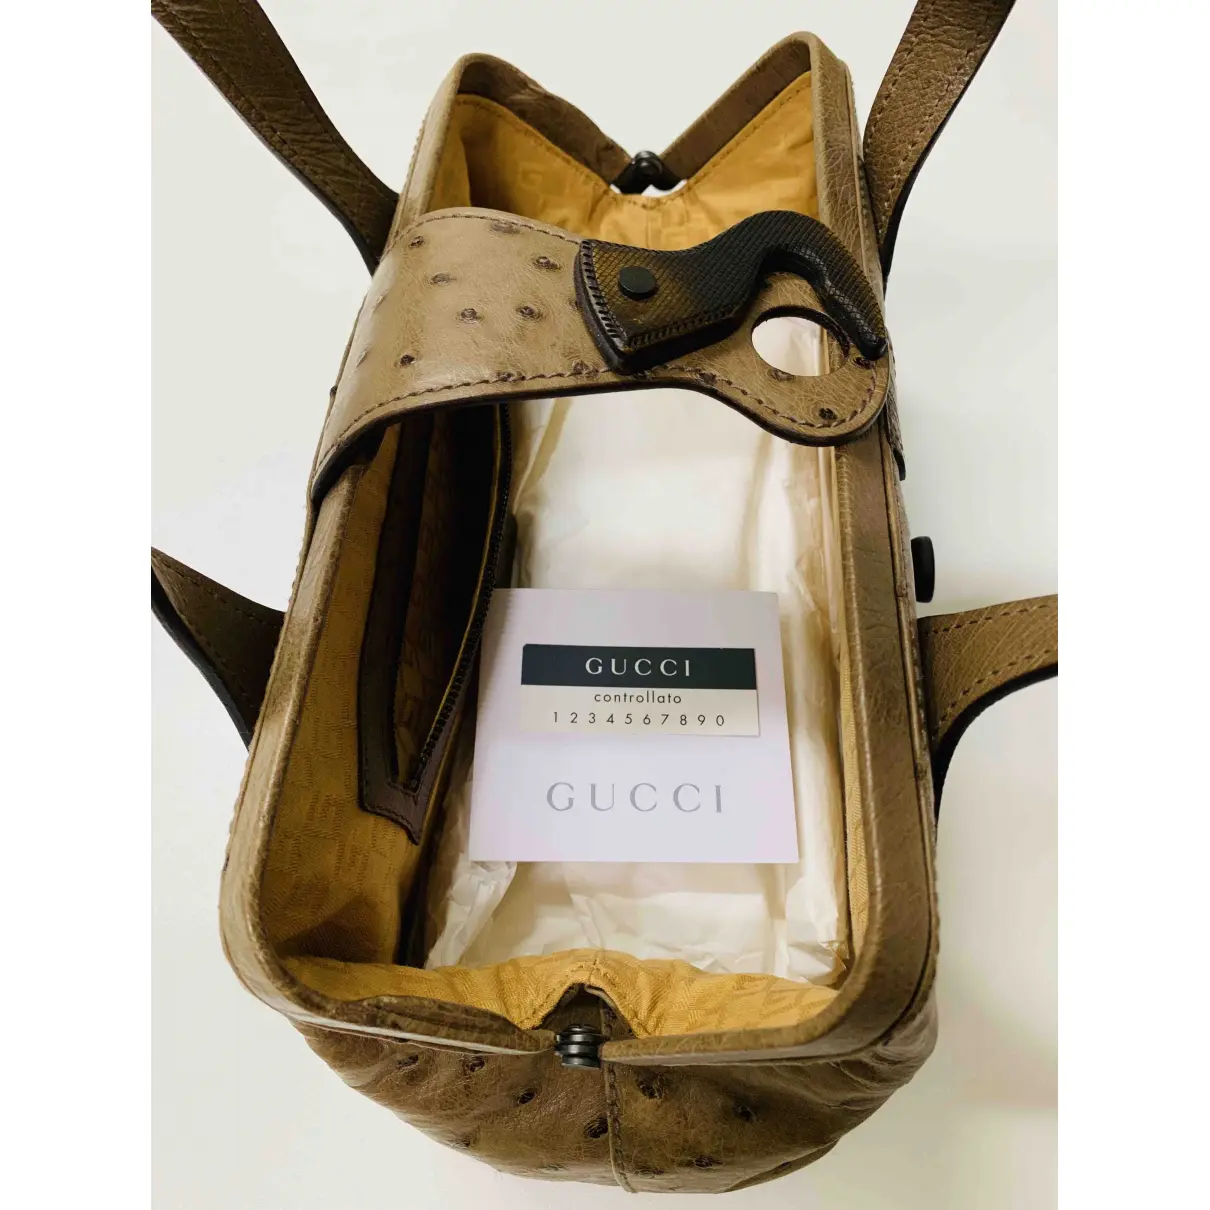 Ostrich bag Gucci - Vintage